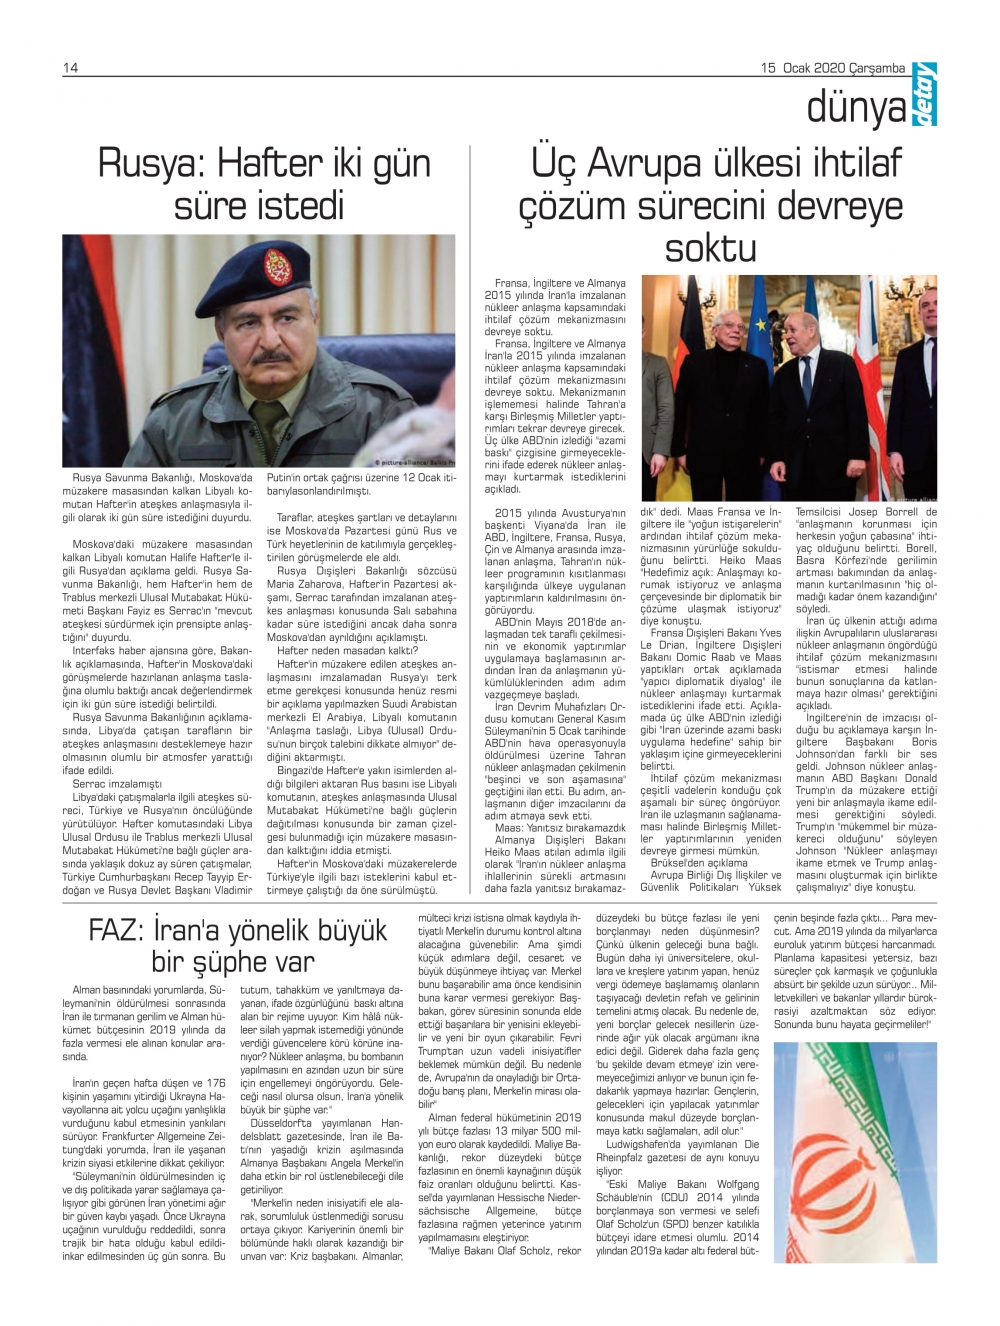 Detay Gazetes 15 Ocak 2020 galerisi resim 13